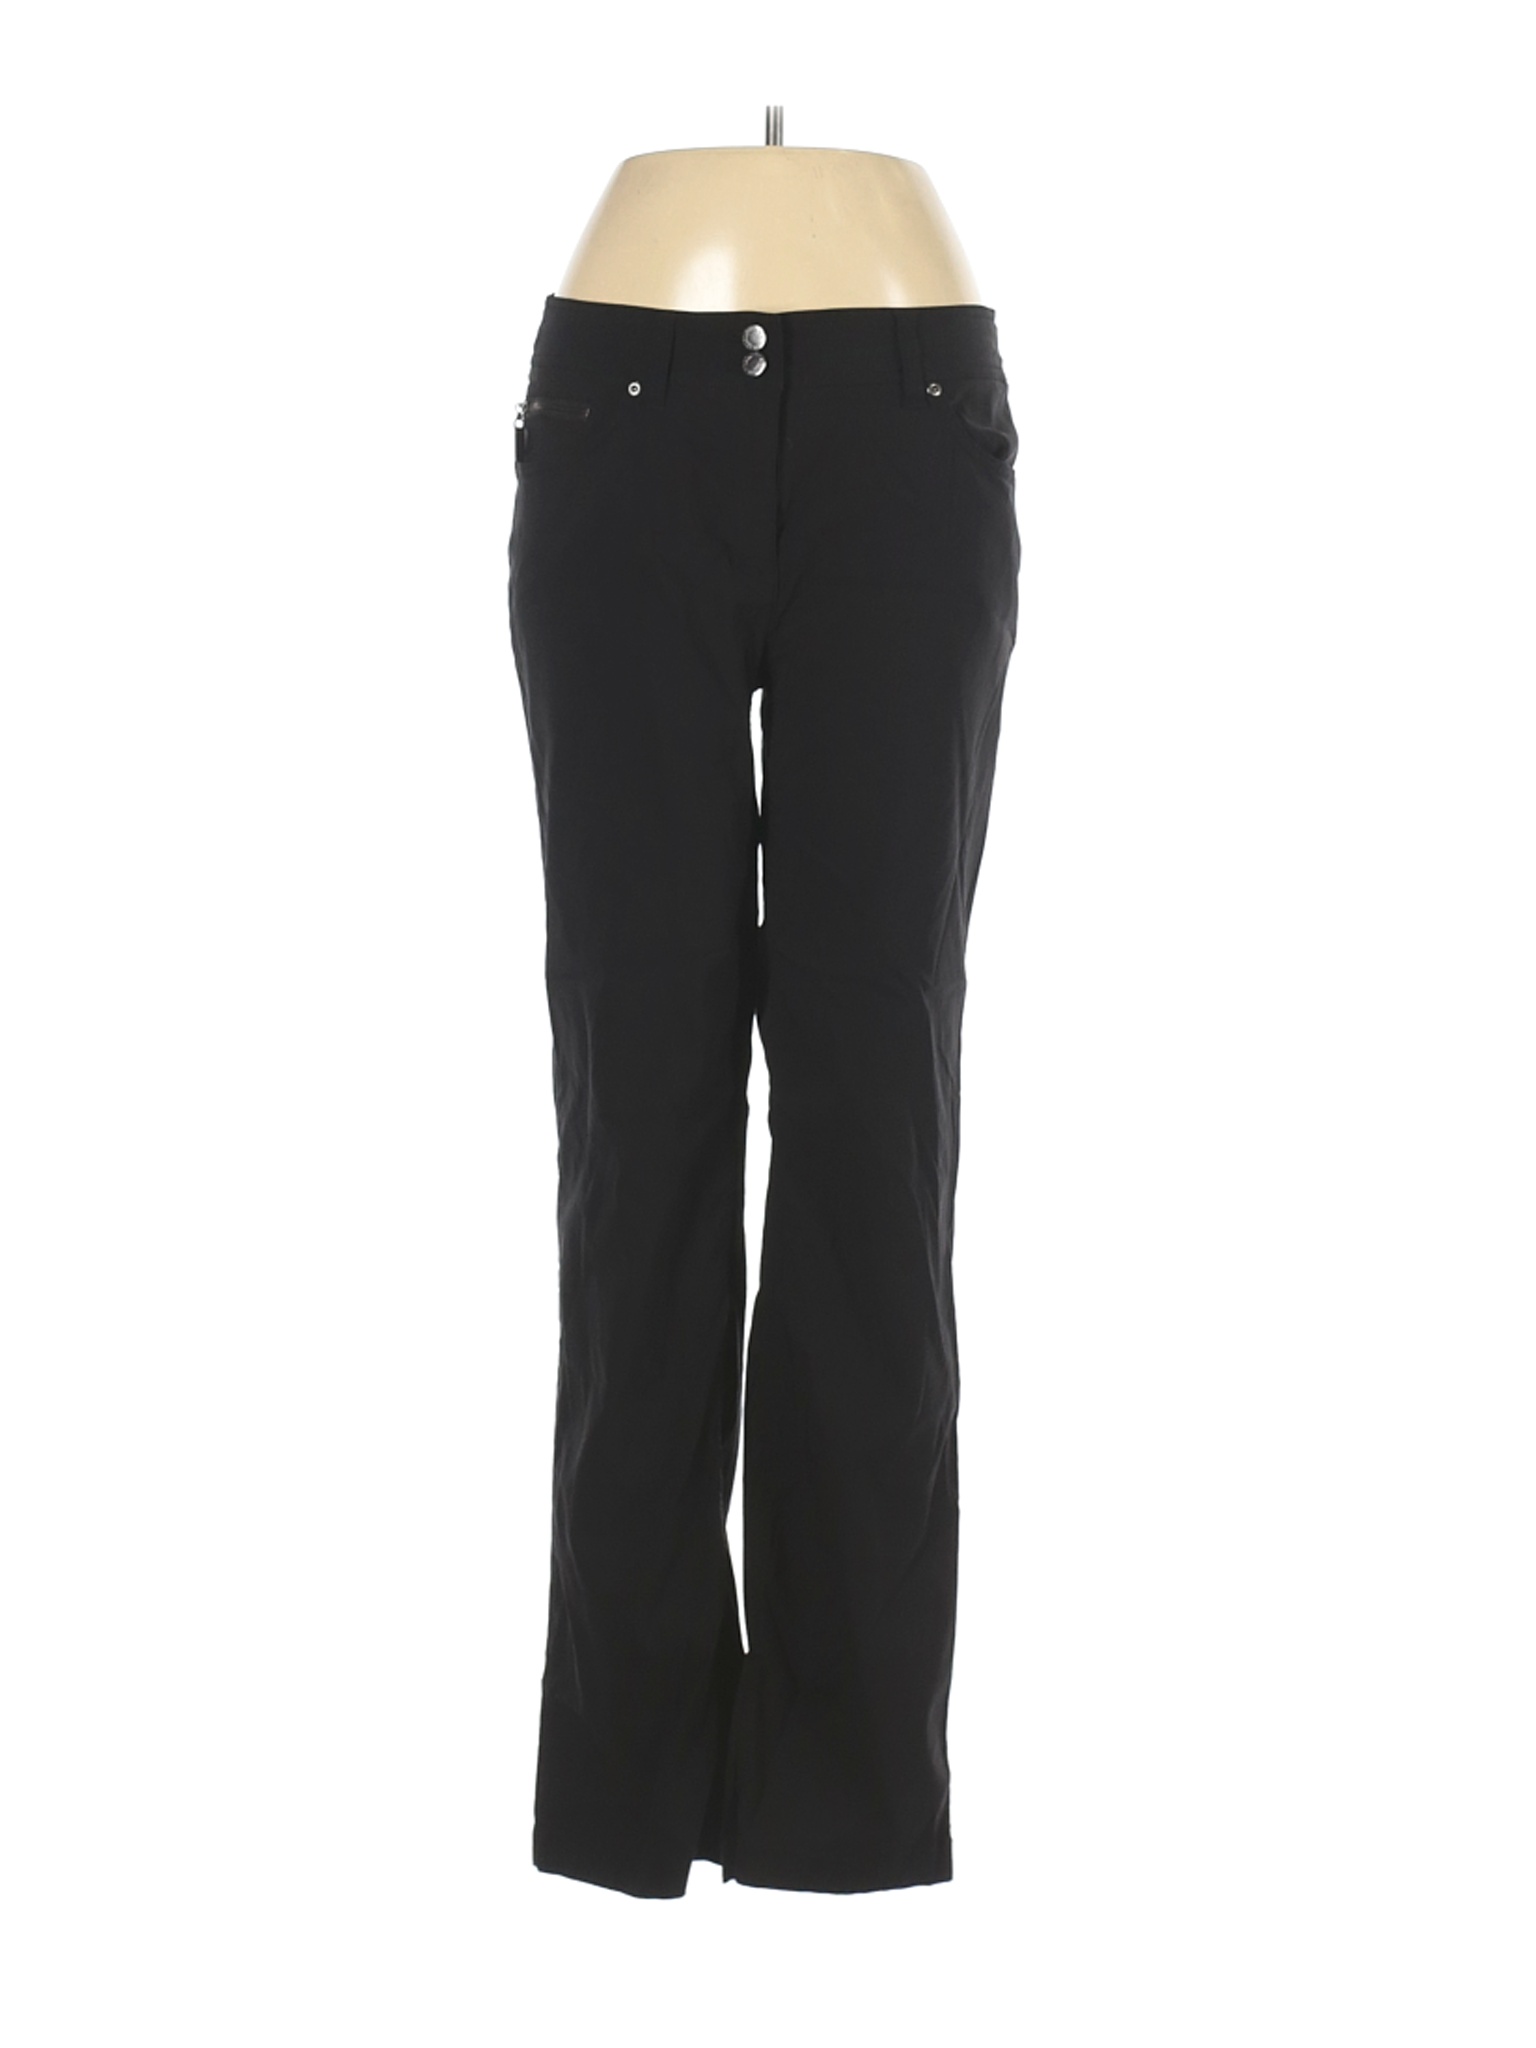 Jones New York Sport Women Black Dress Pants 10 | eBay